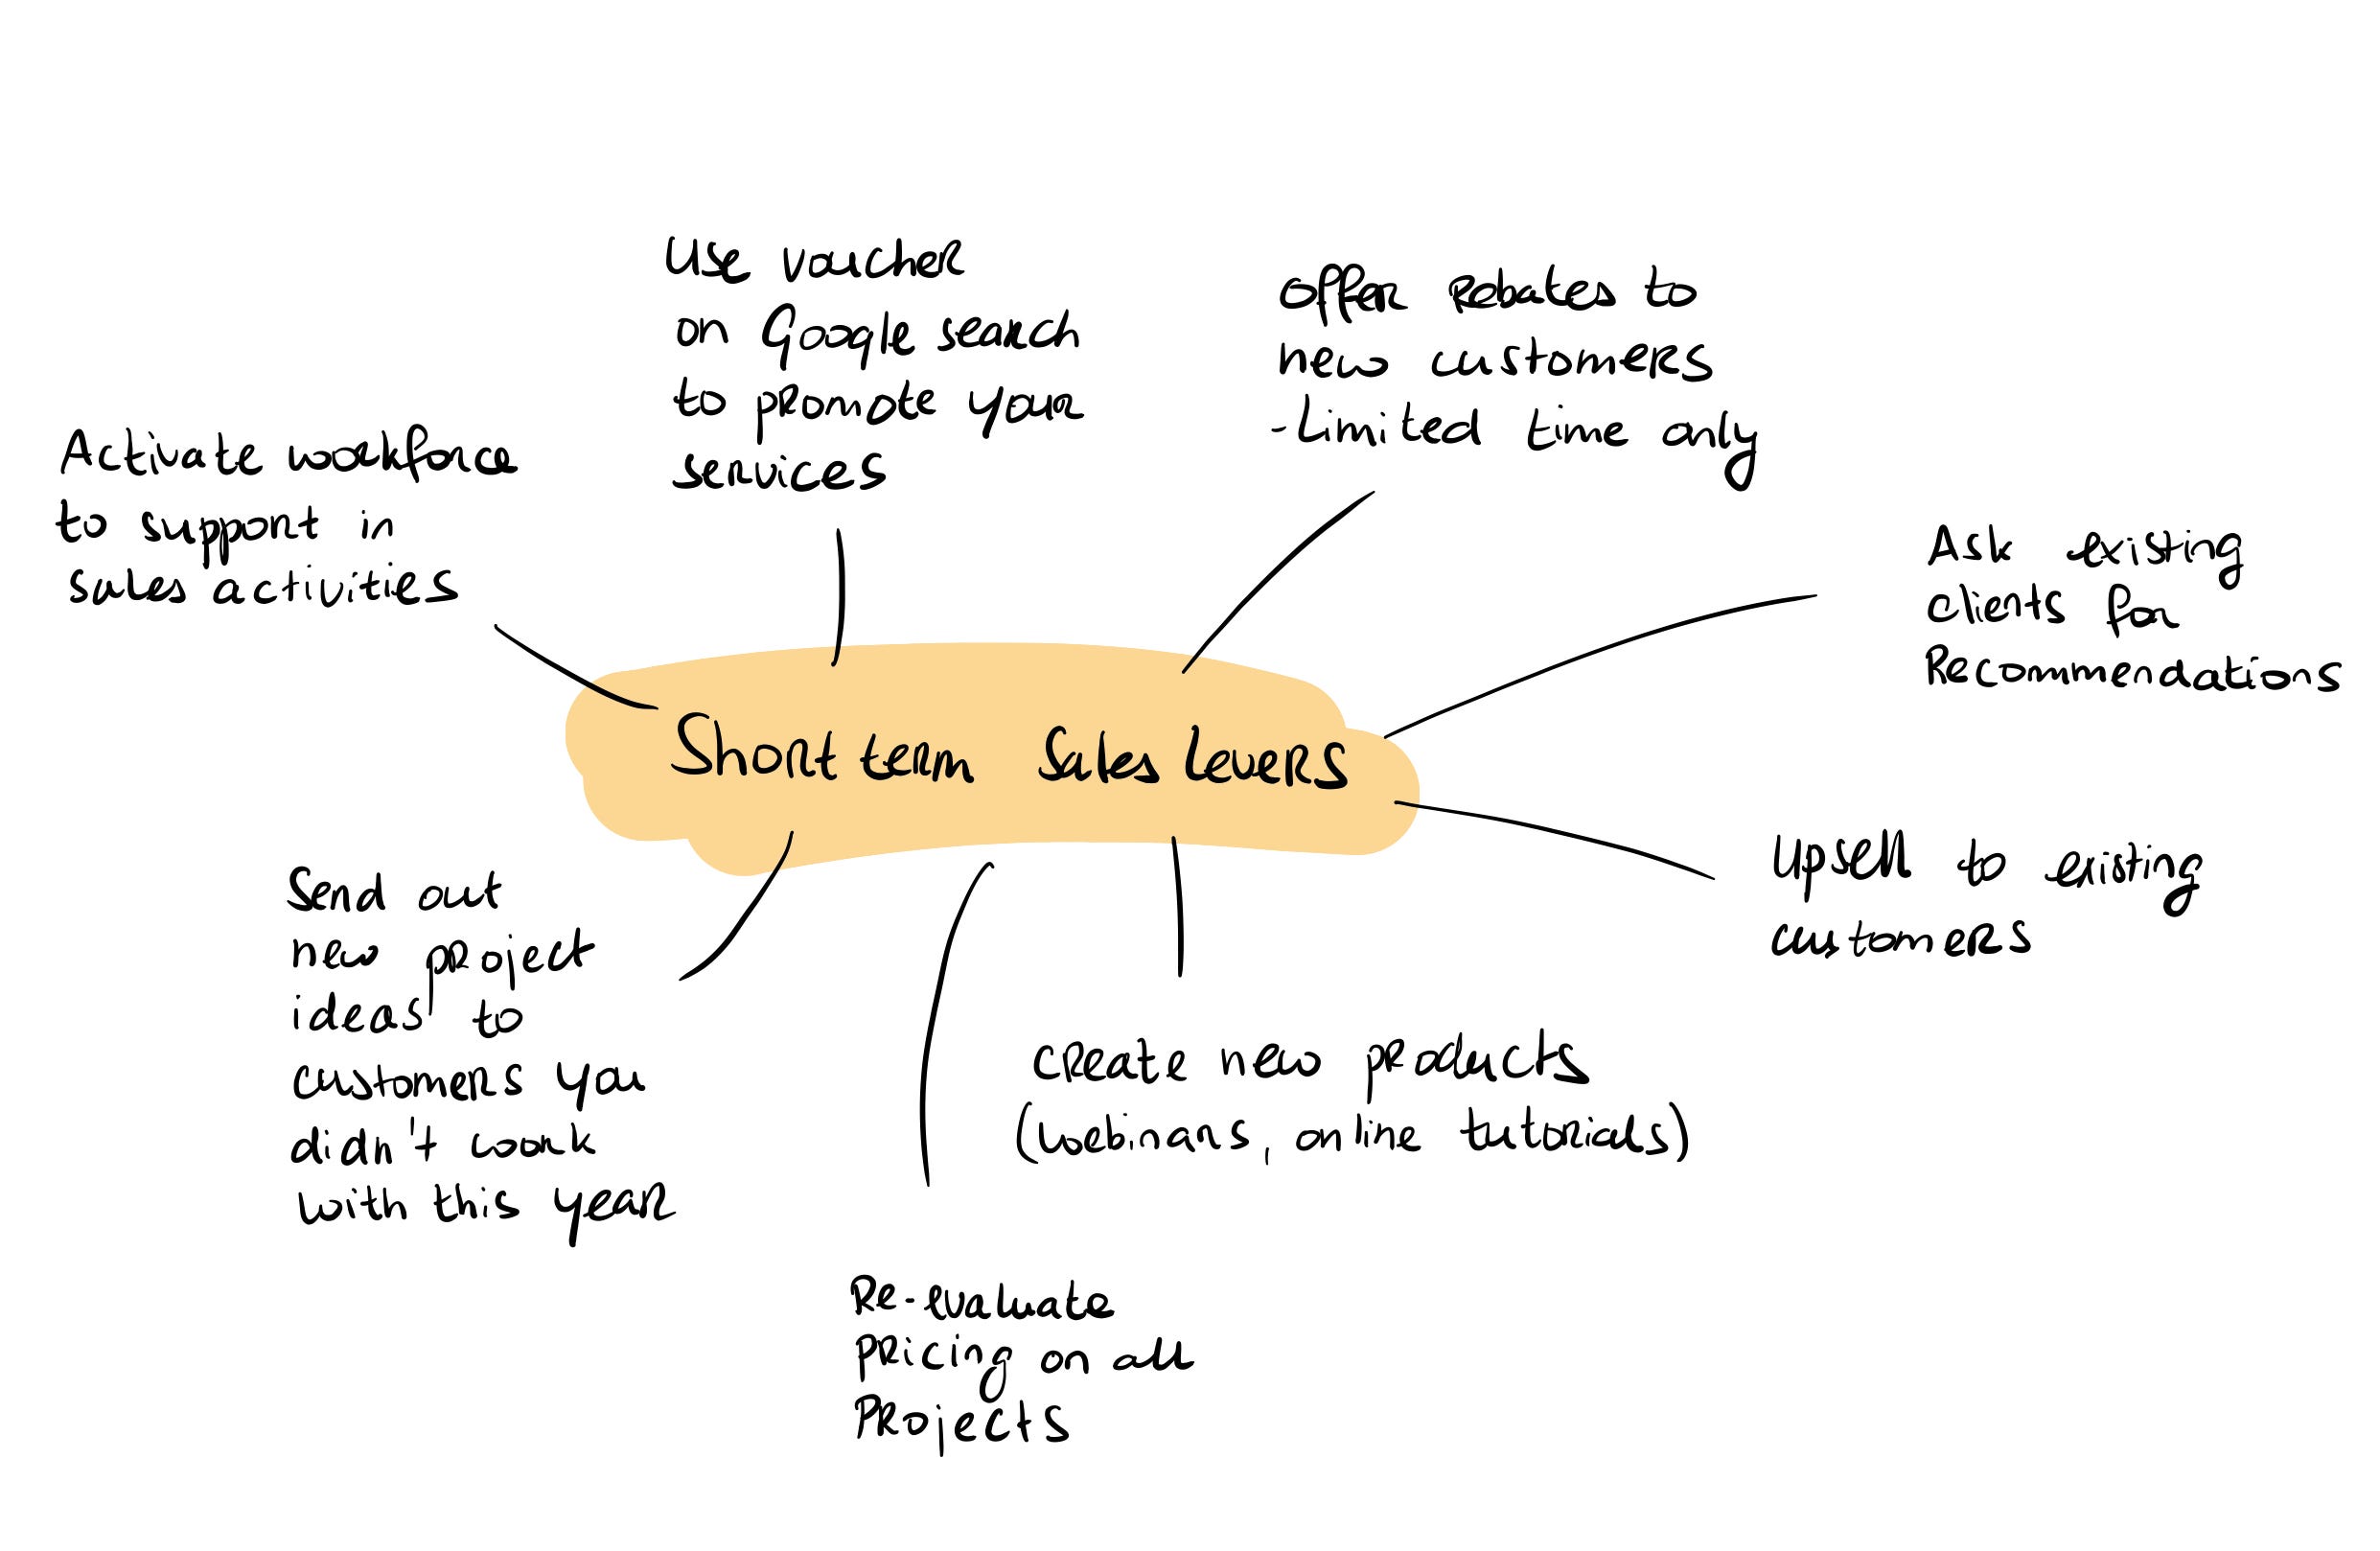 Short term sales ideas for entrepreneurs | by Remco Livain | Medium